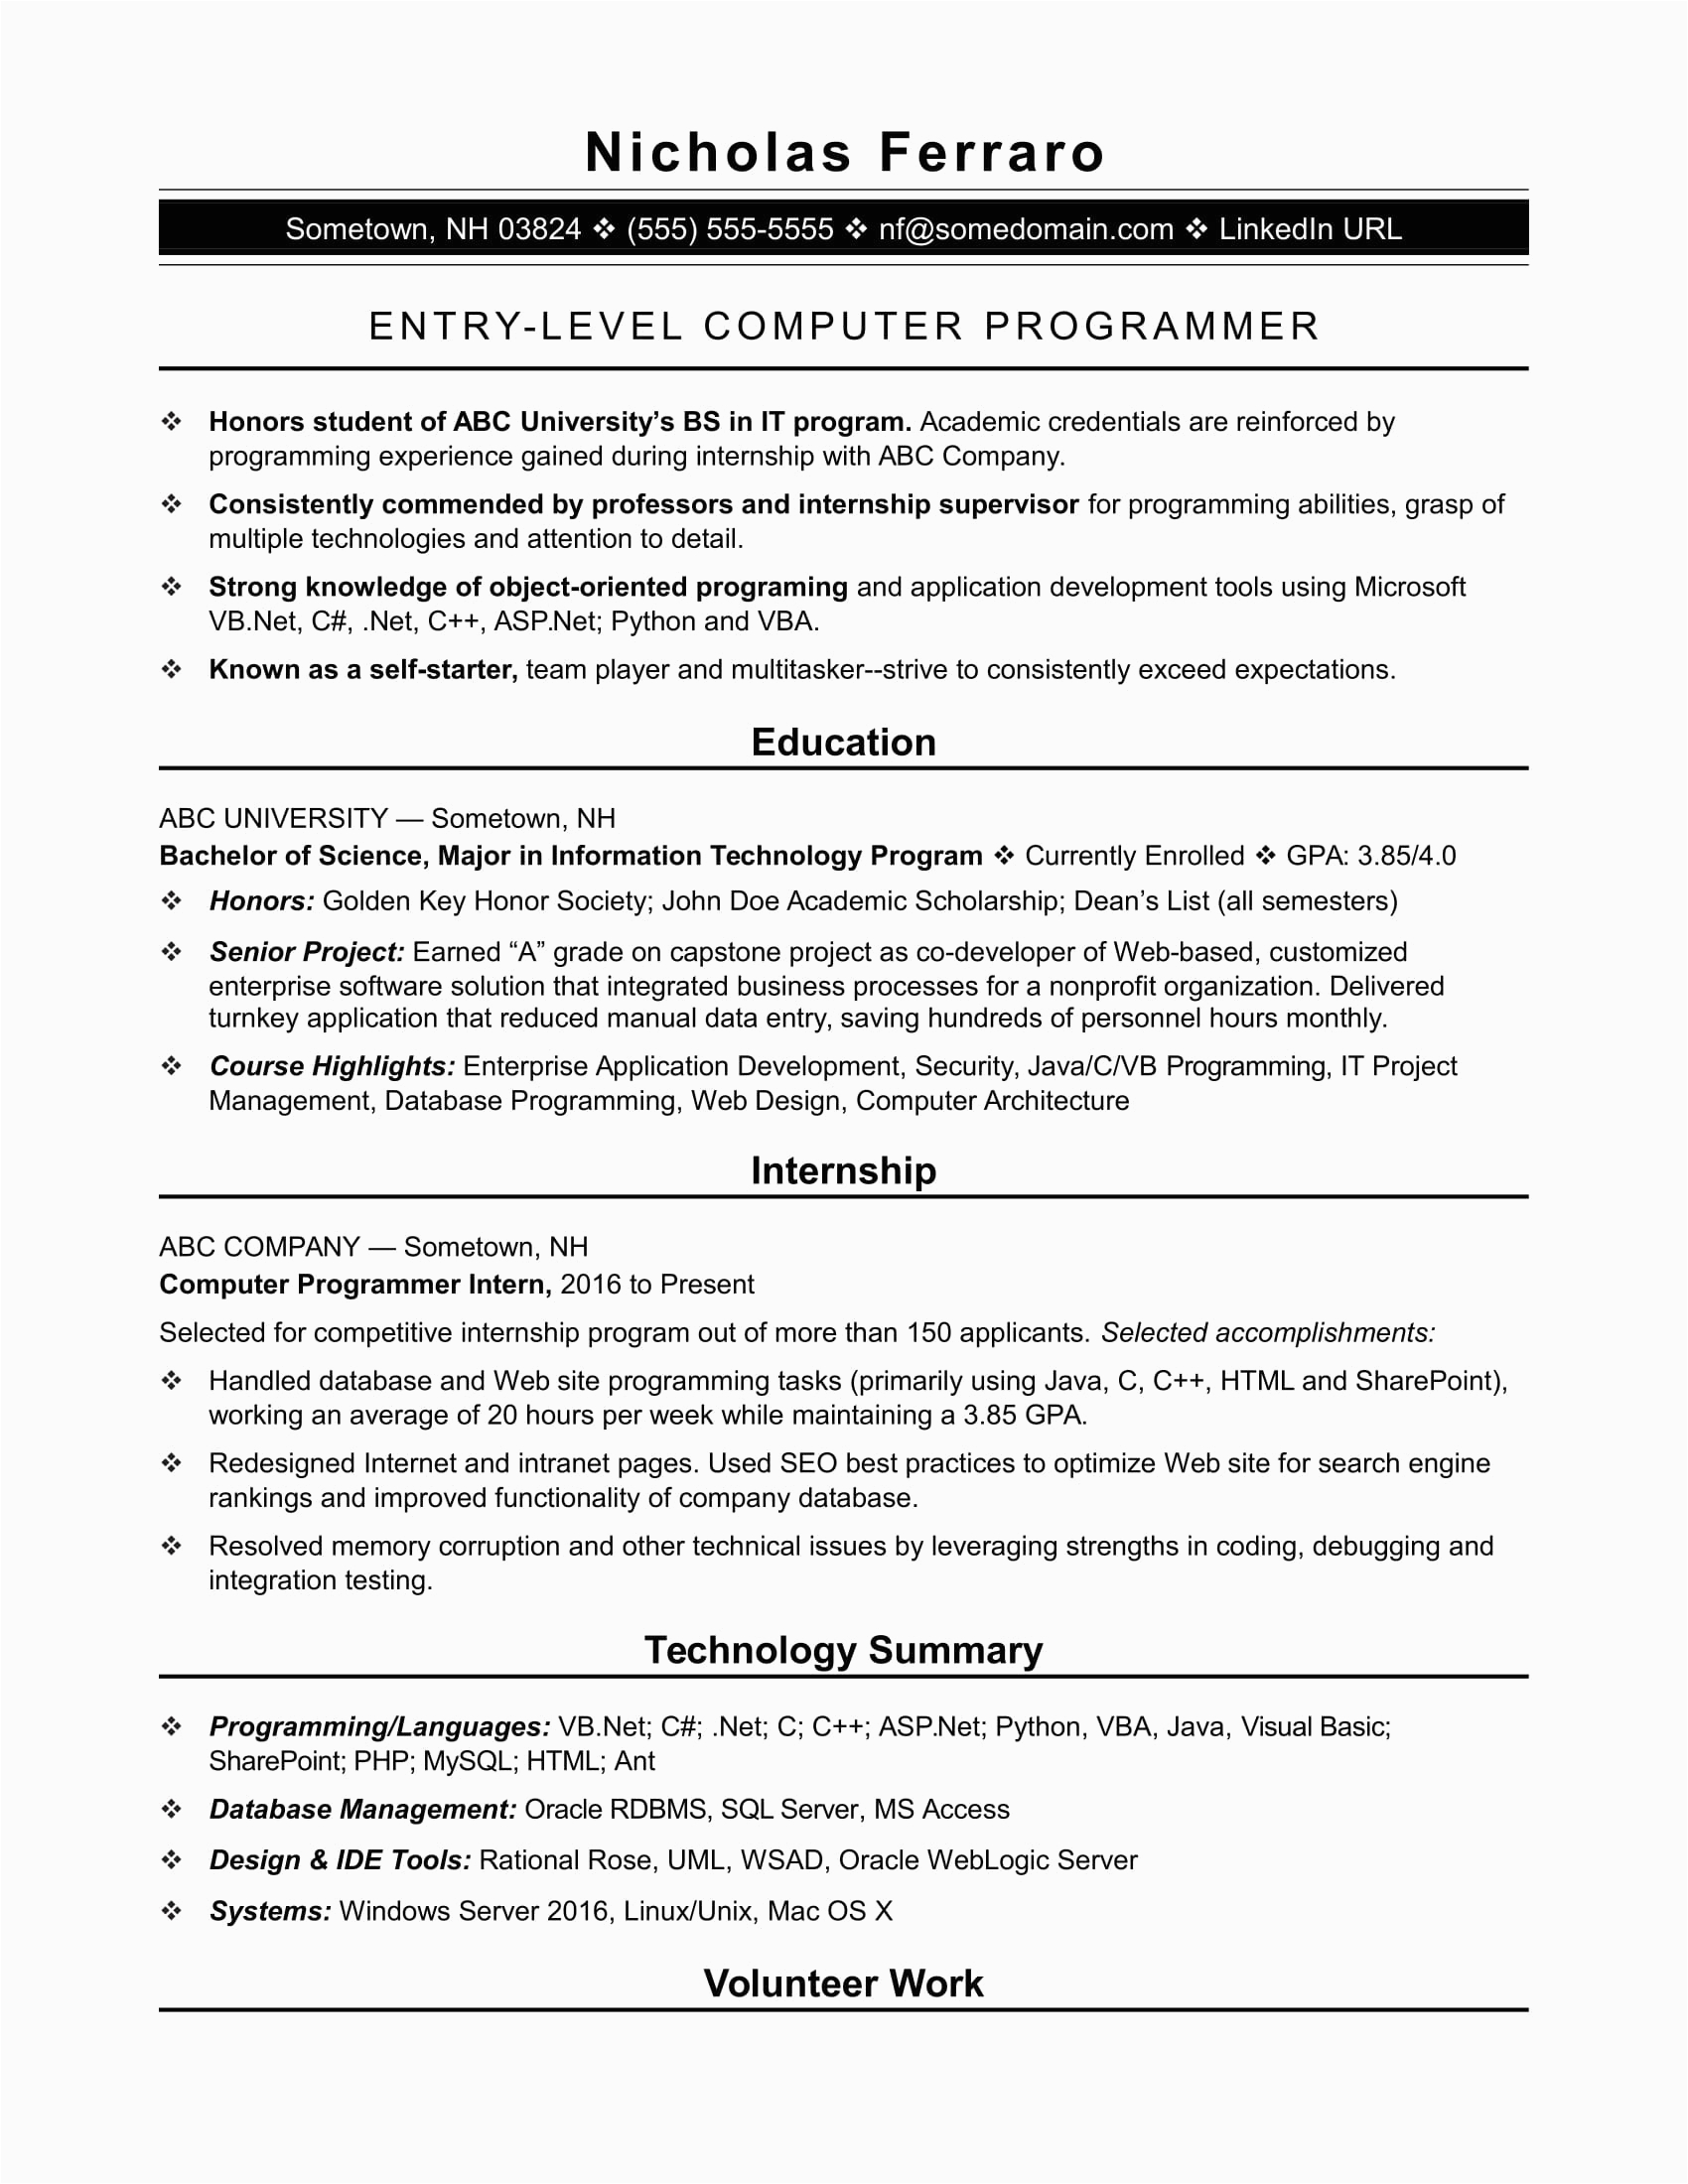 Sample College Graduate Resume In Computer Programming Entry Level Programmer Resume